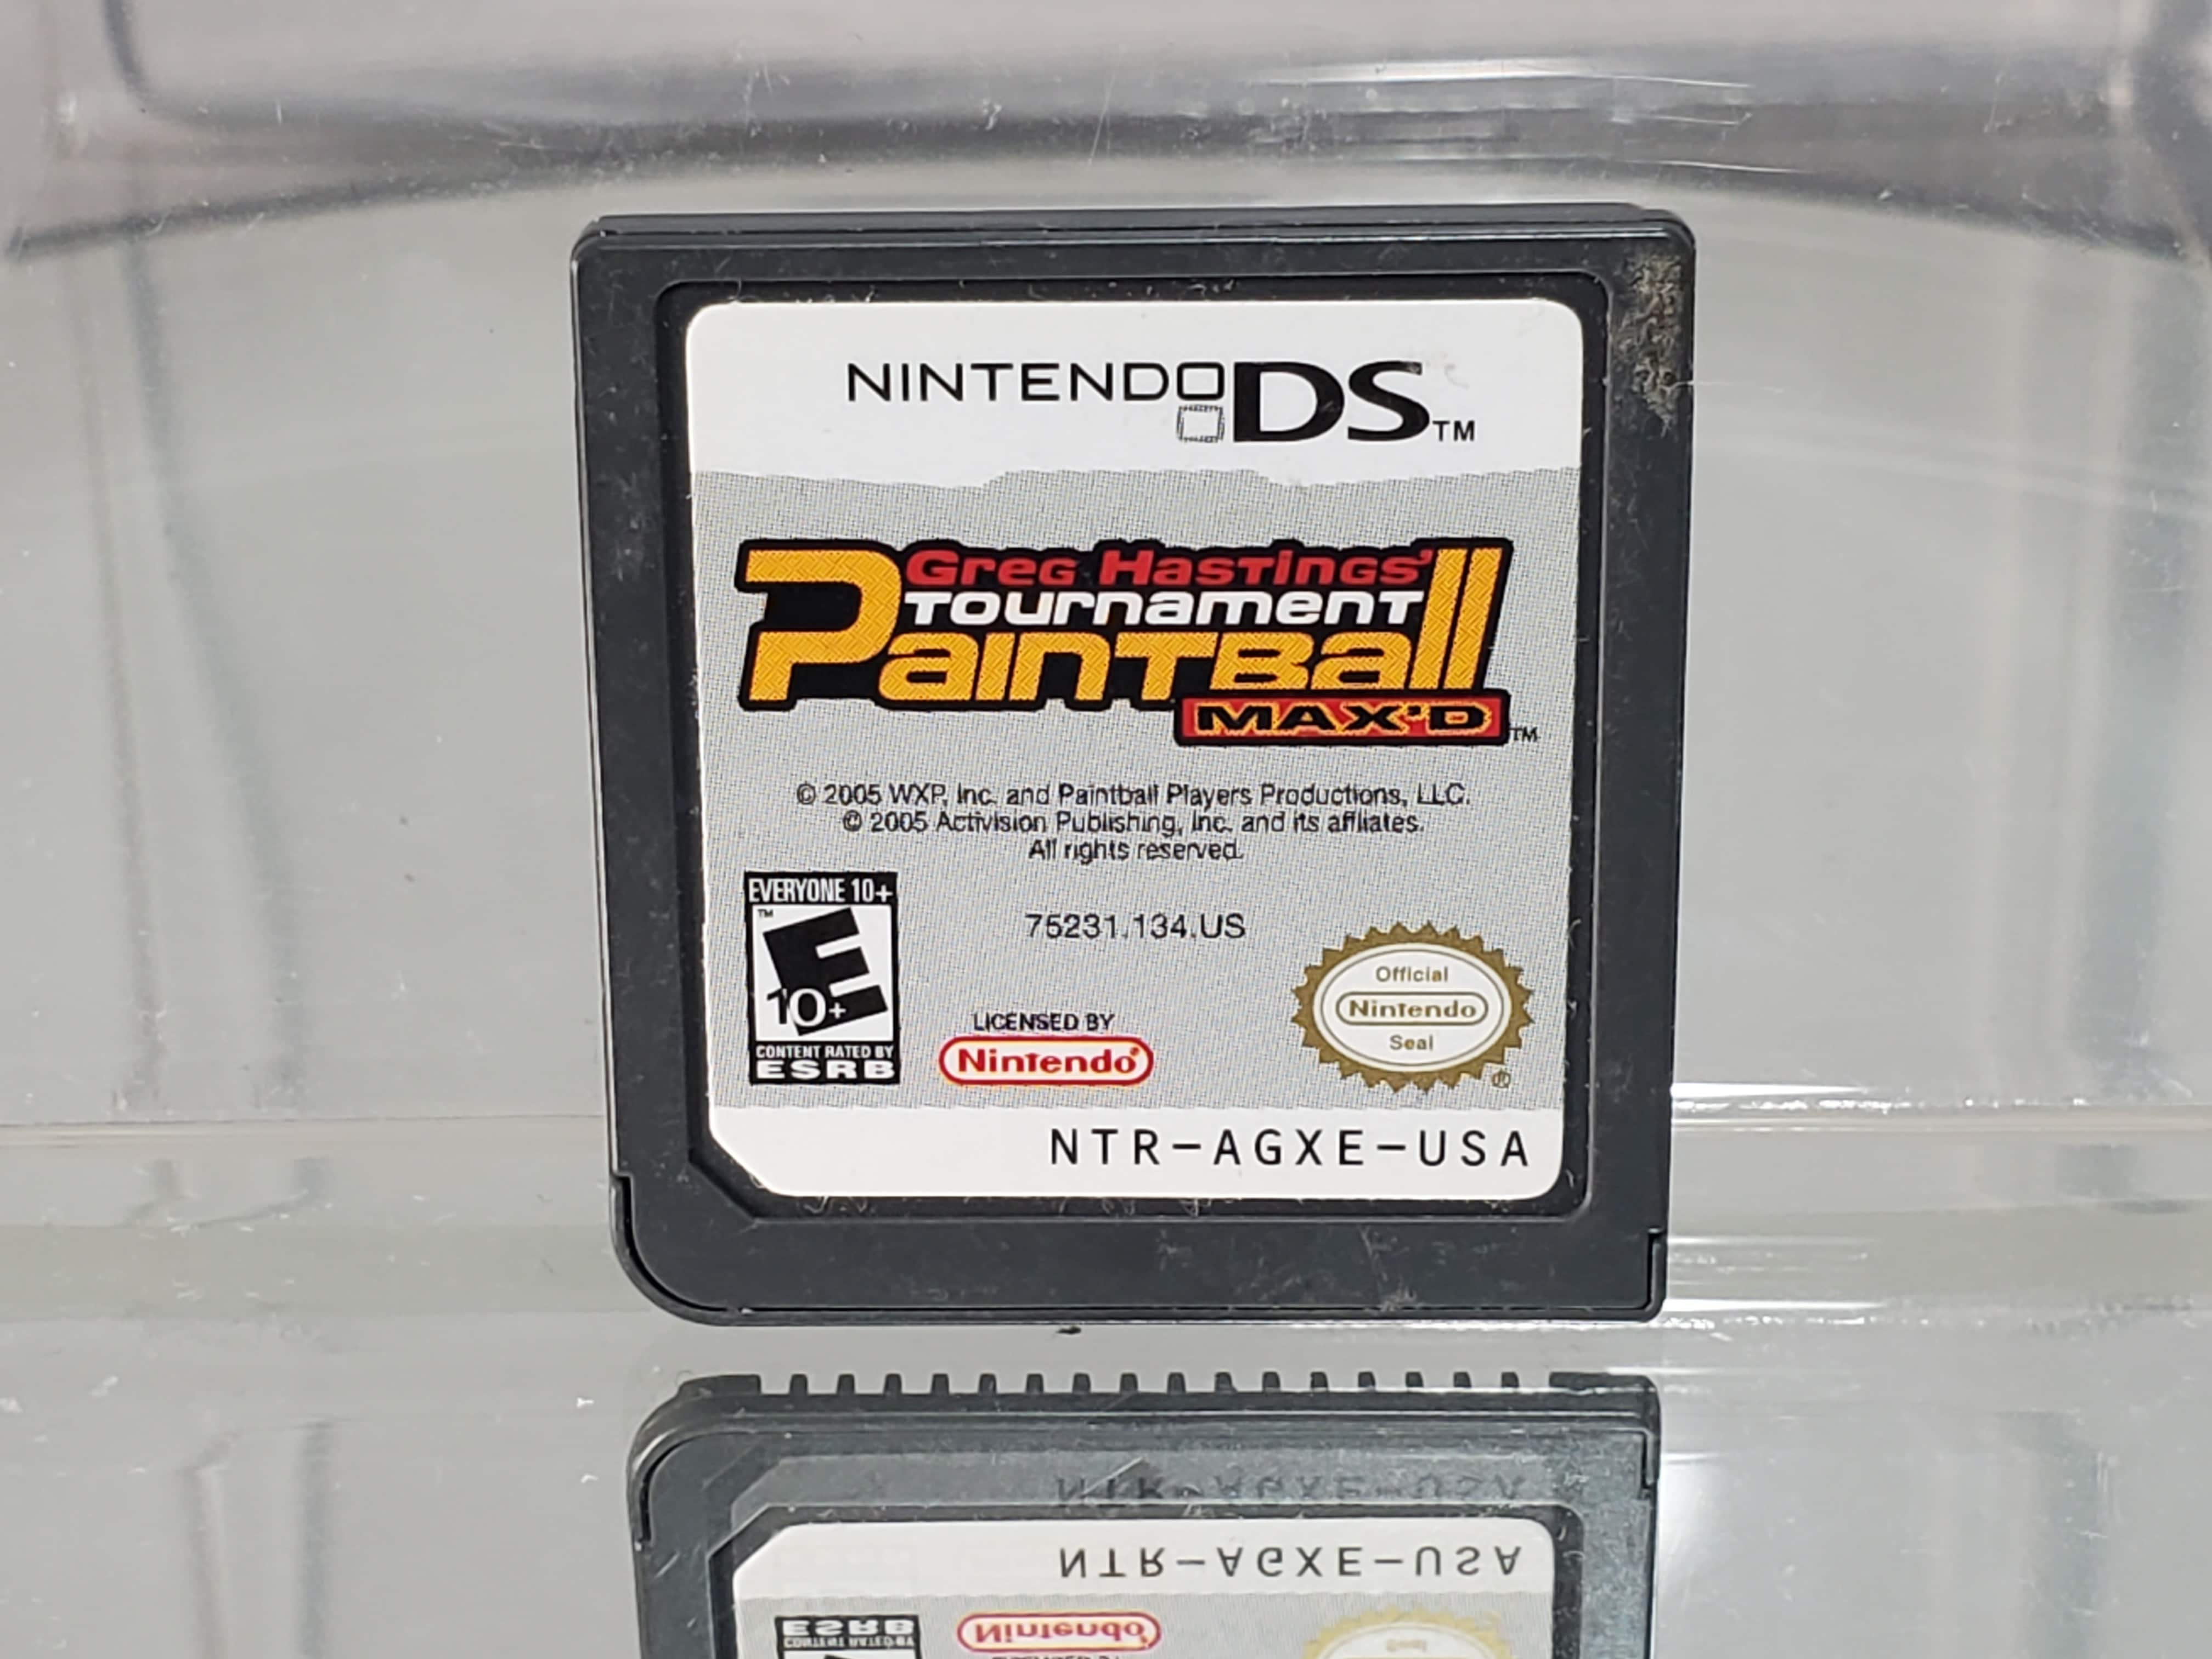 Nintendo DS Greg Hastings Tournament Paintball Maxed | eBay